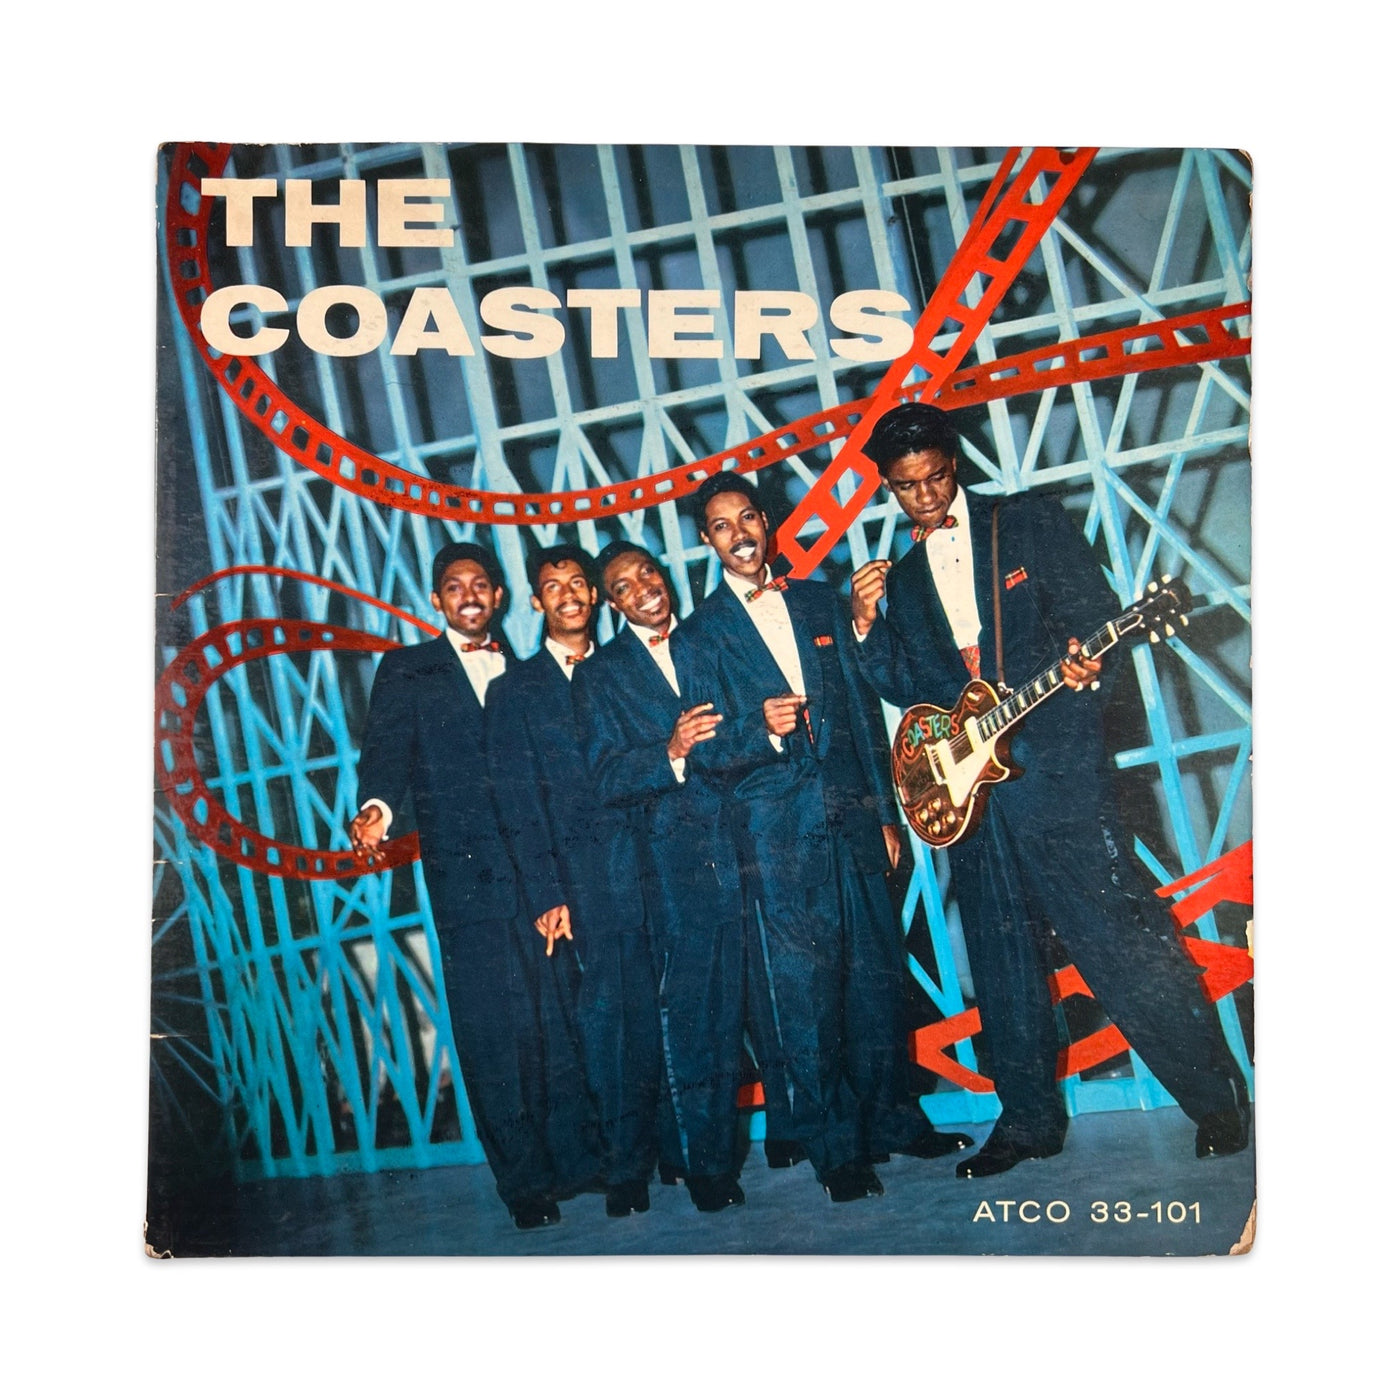 The Coasters – The Coasters